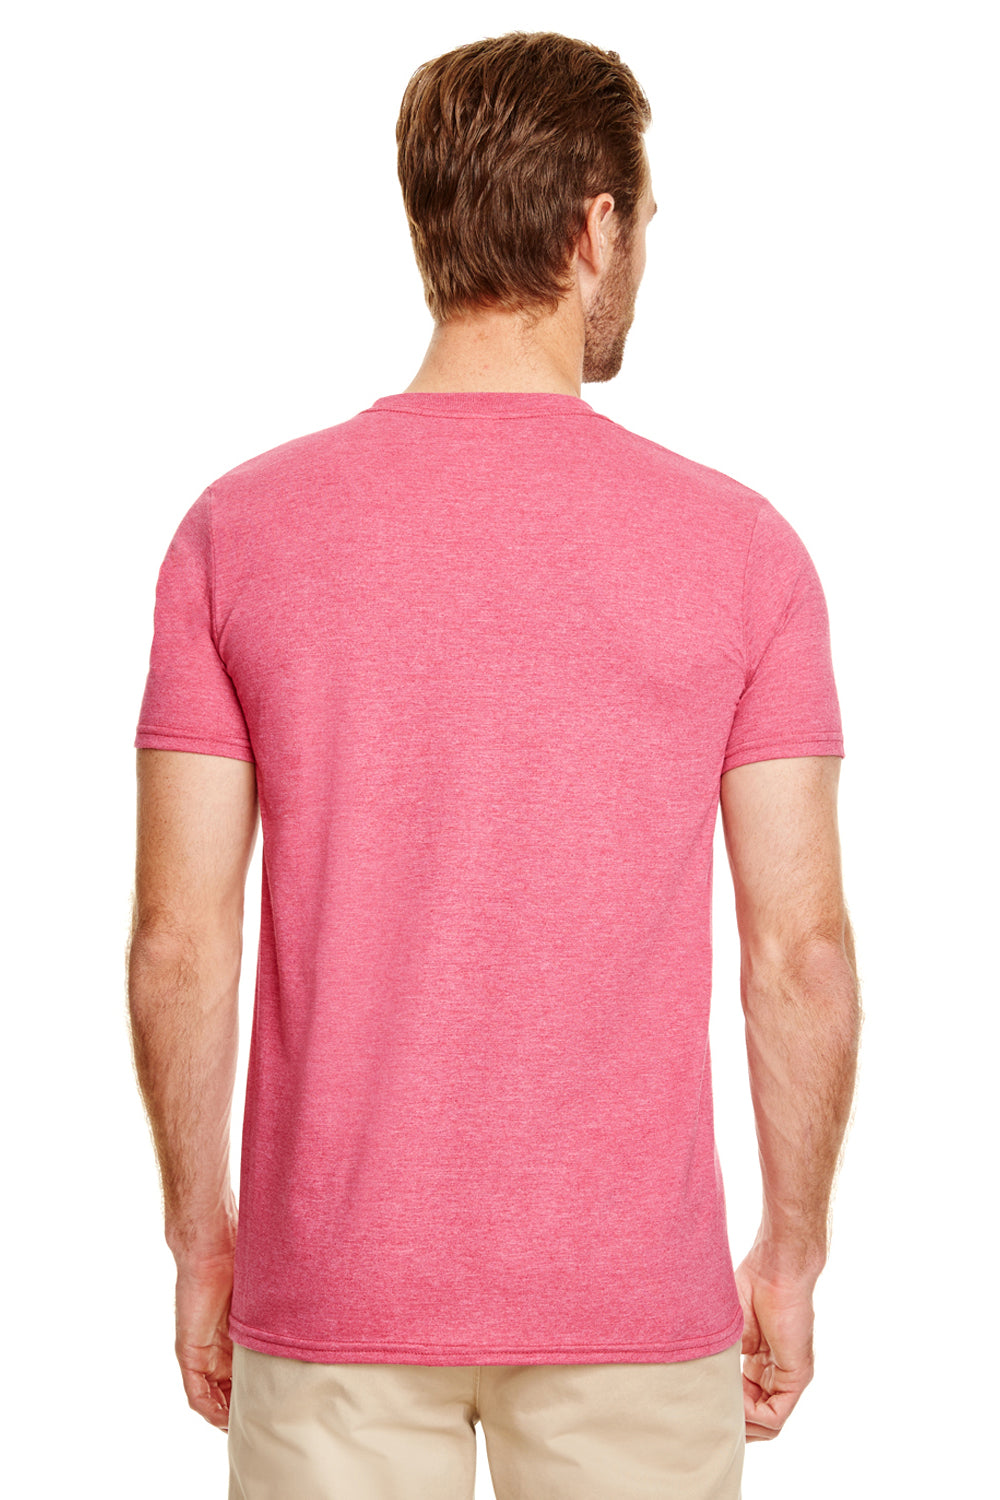 Gildan G640 Mens Softstyle Short Sleeve Crewneck T-Shirt Heather Cardinal Red Back